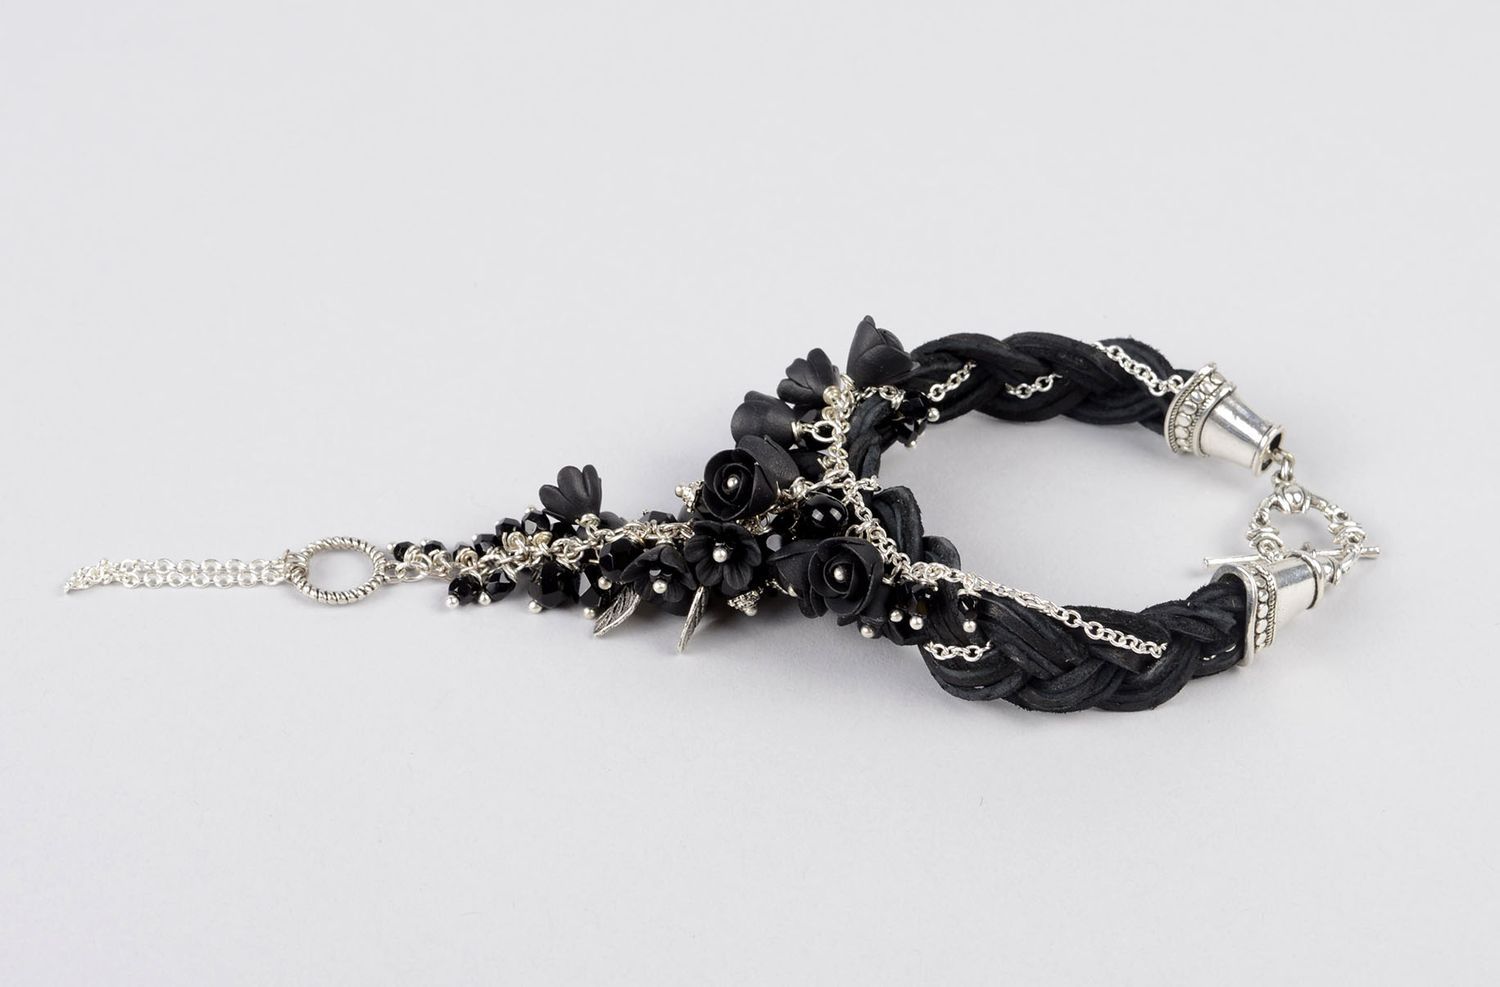 Handmade bracelet unusual bracelet leather accessory gift ideas beads jewelry photo 1